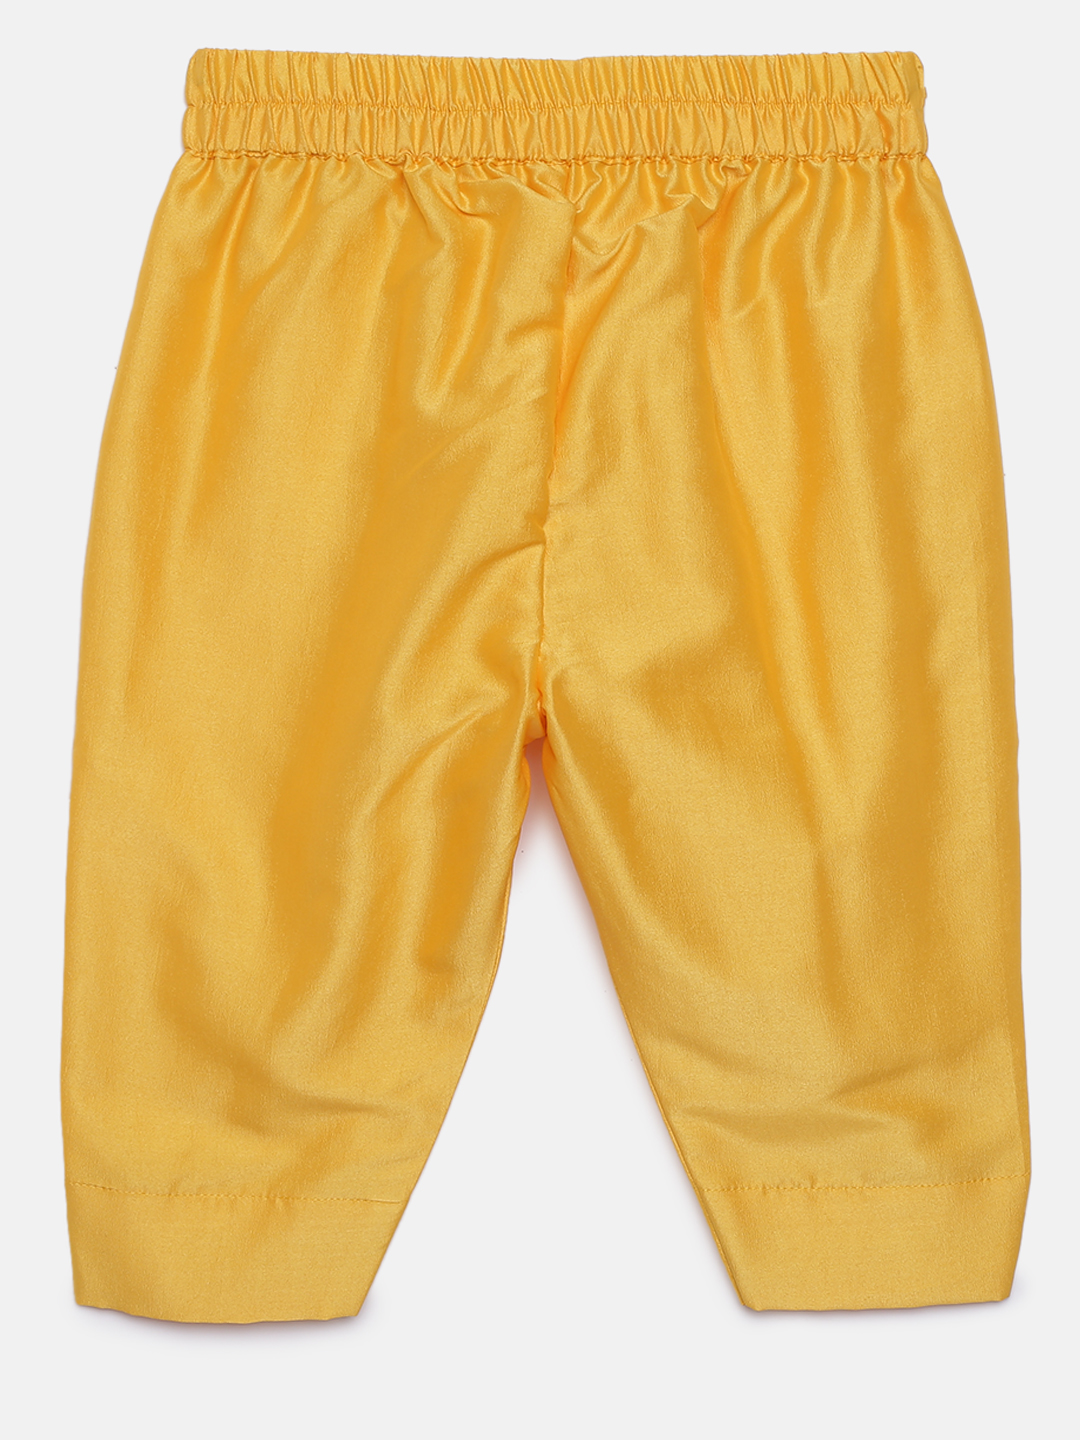 7 2 One shoulder yellow ruffle kurta with pants